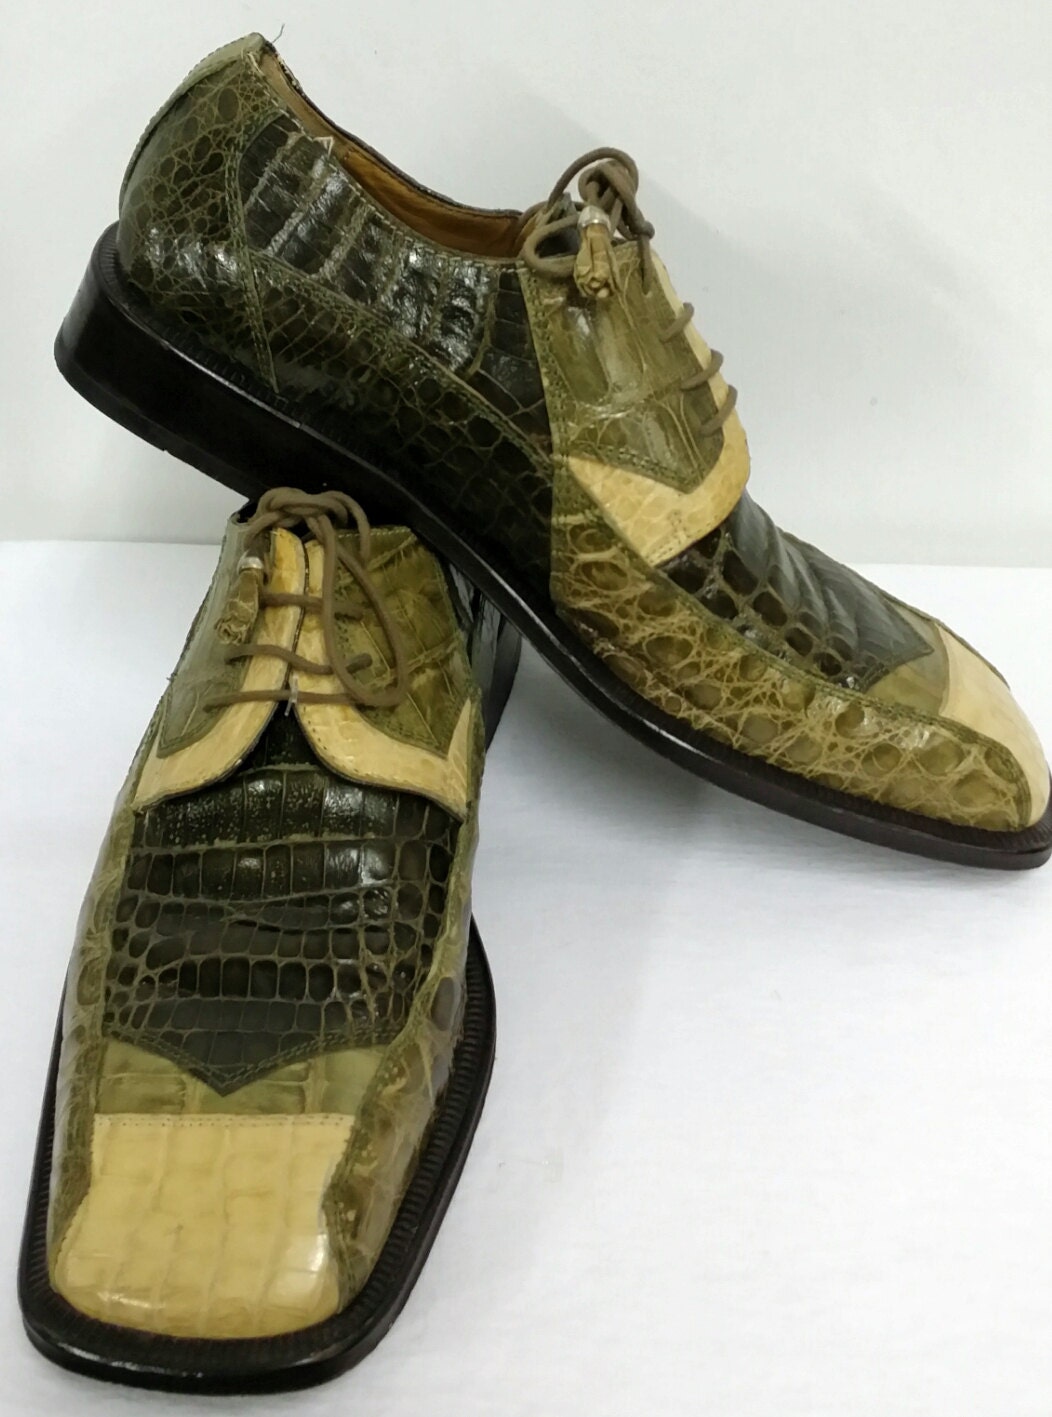 David Eden 3 Tone Alligator shoes in size 9